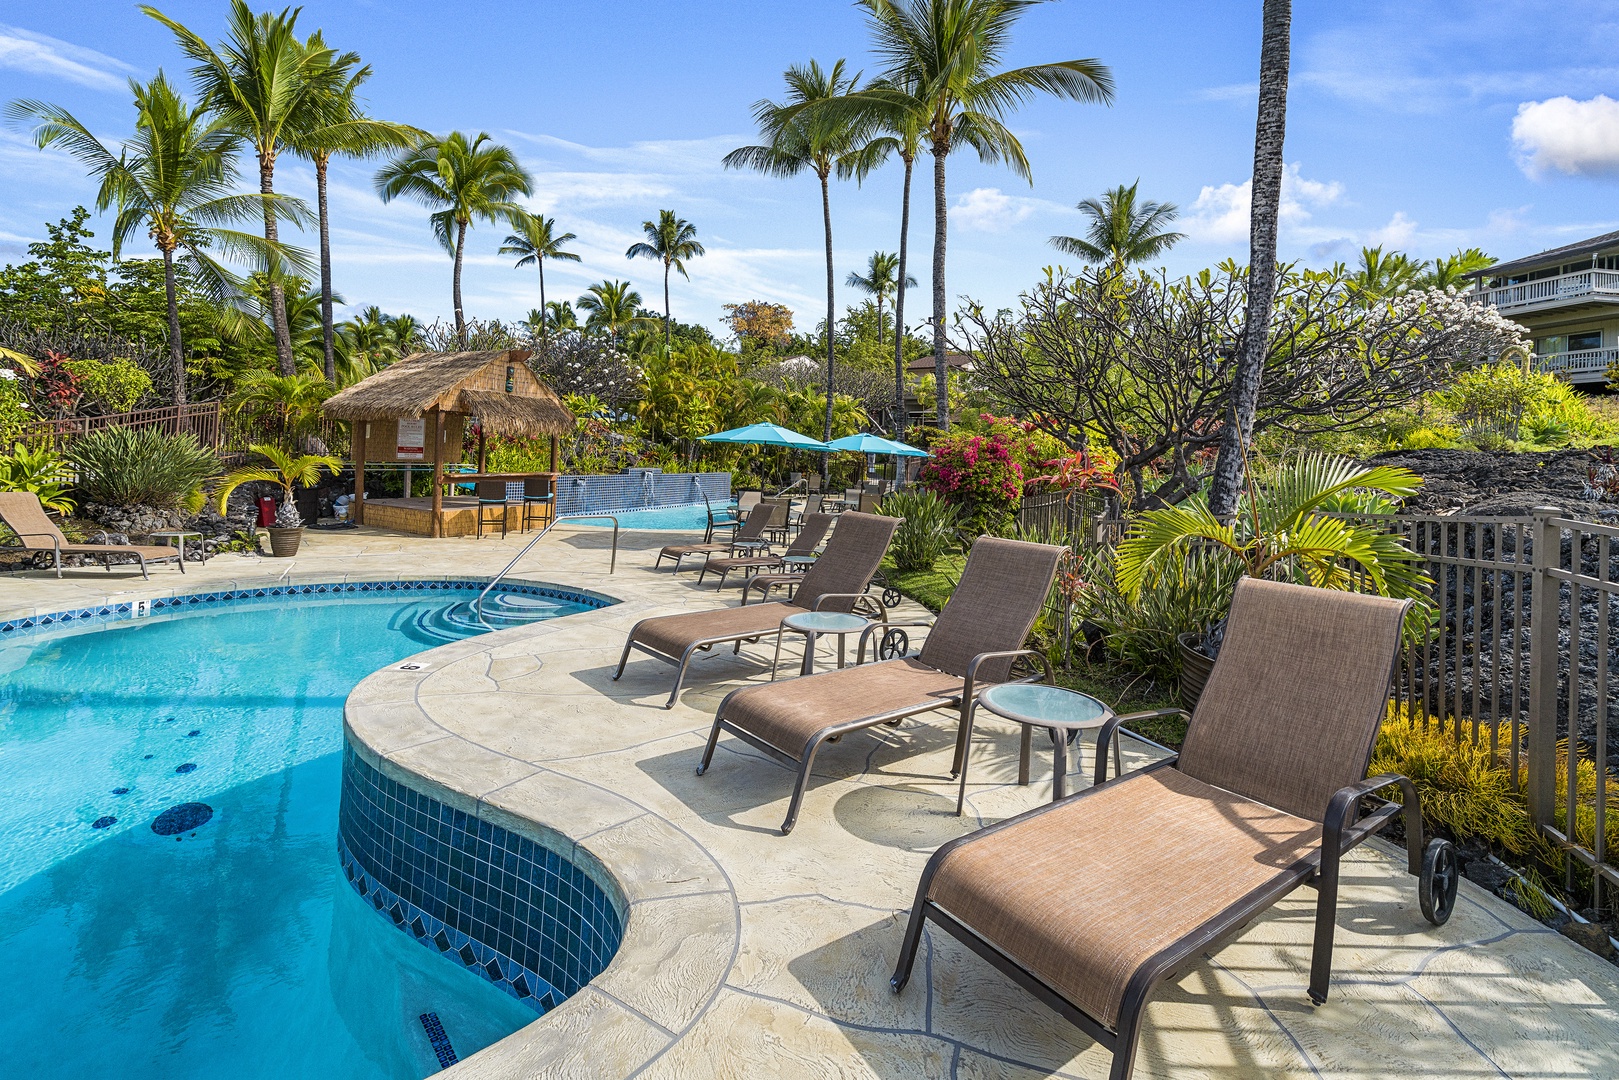 Kailua-Kona Vacation Rentals, Keauhou Resort 116 - Relax in this slice of Paradise